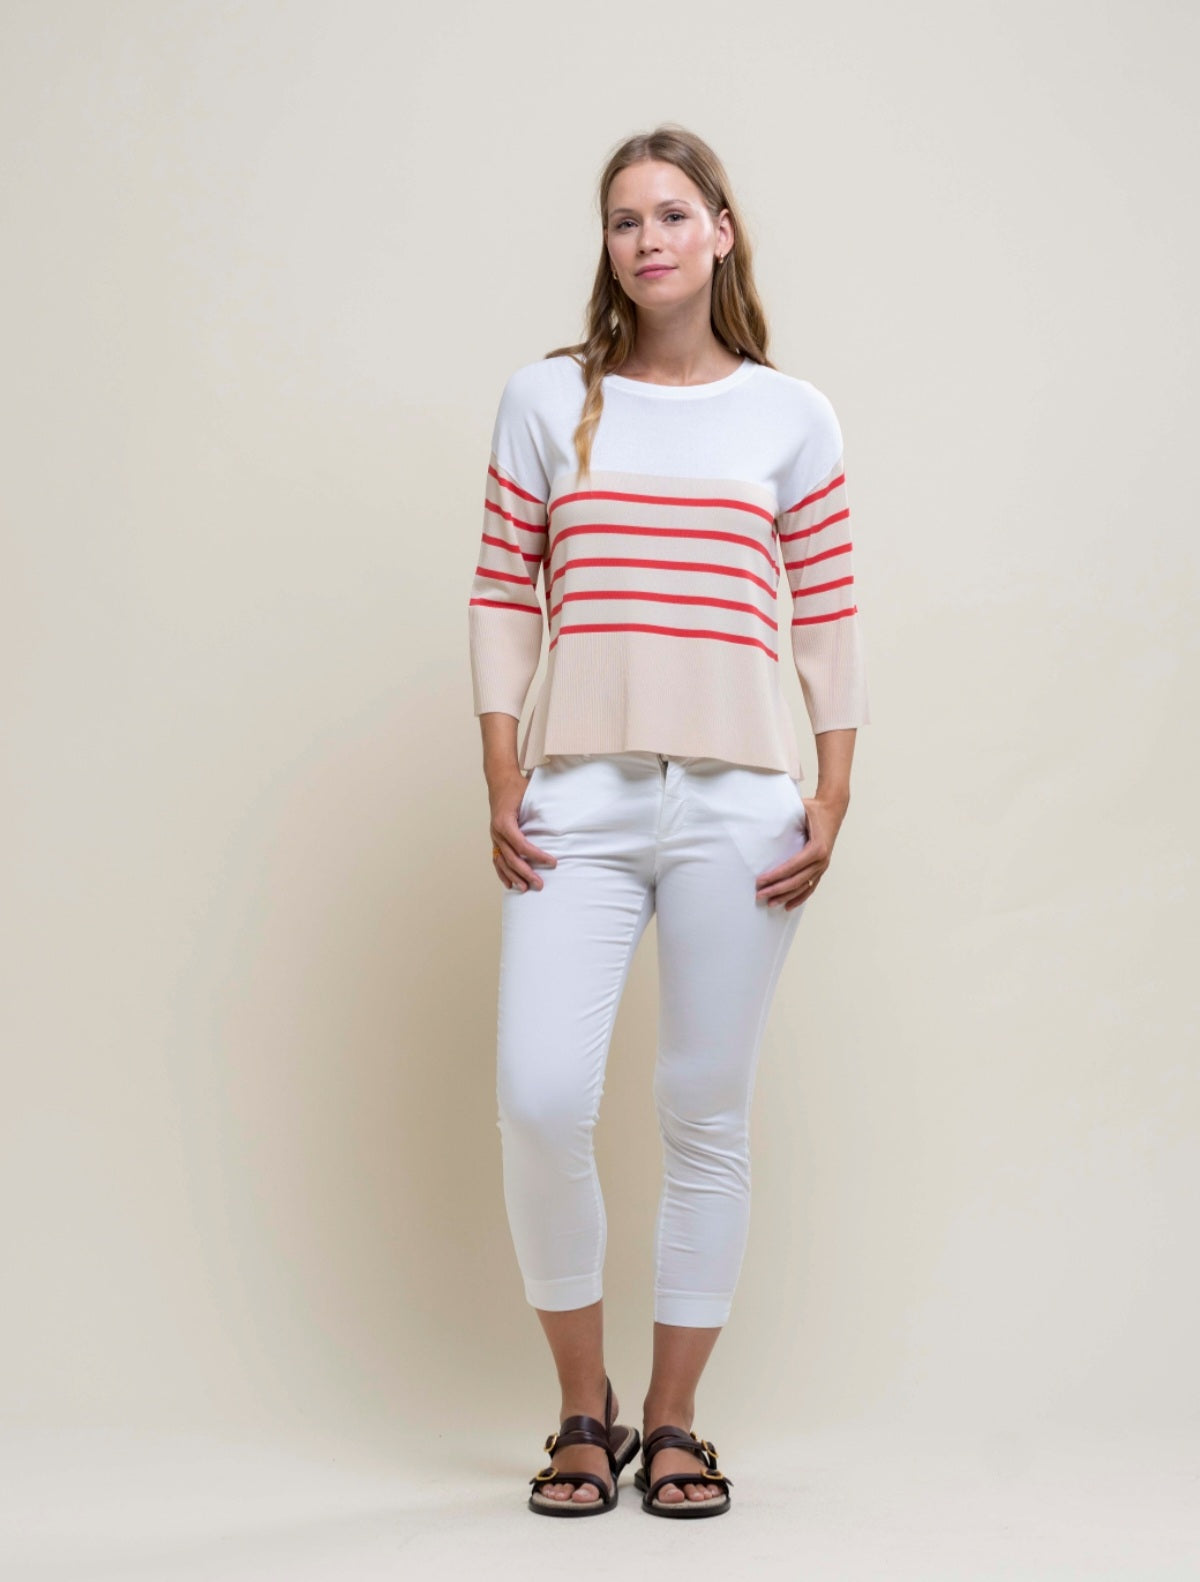 Hongo red horizontal striped light knit
Product code JL02H501